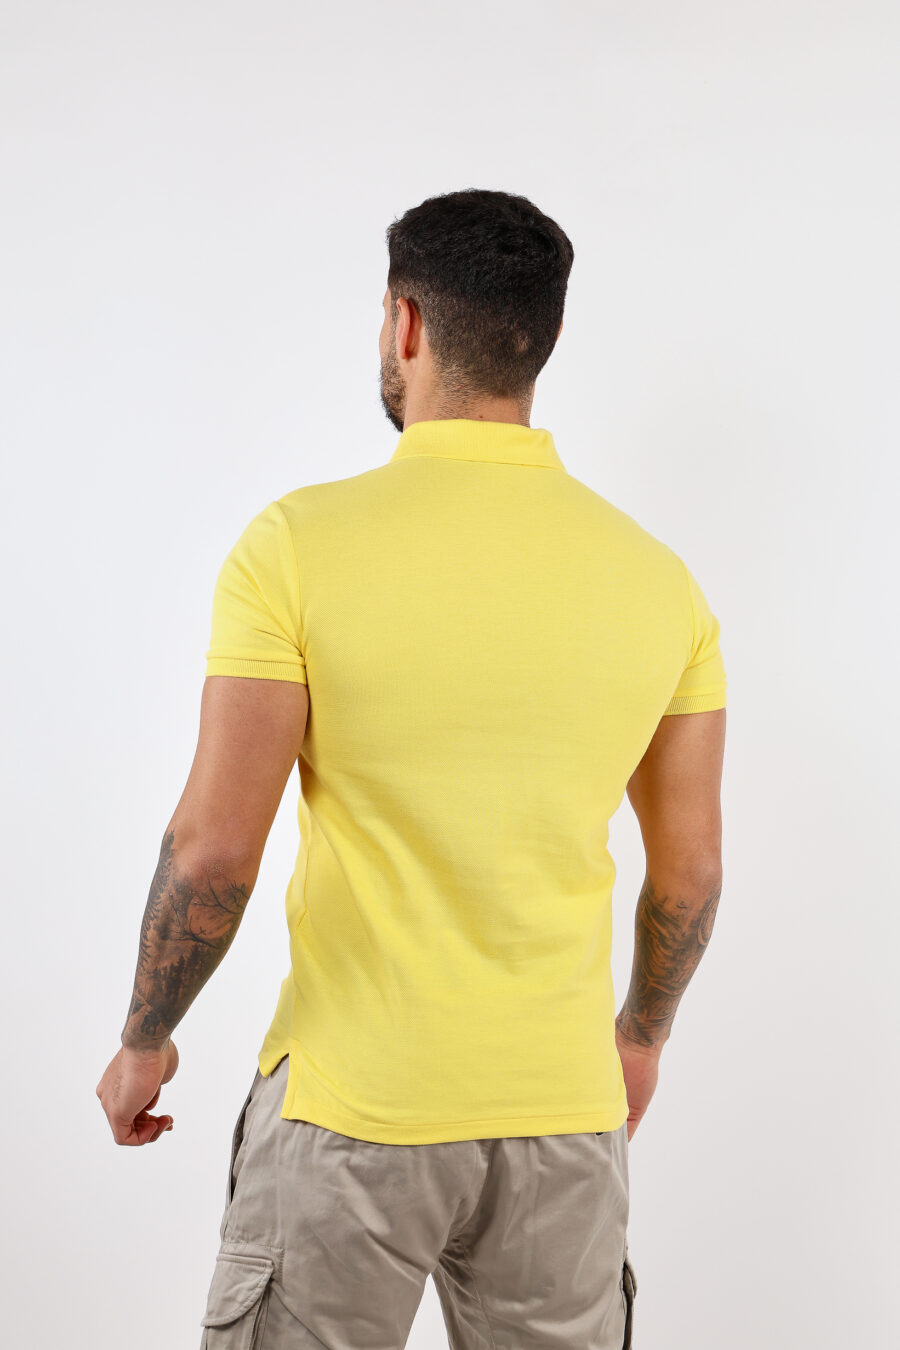 T-shirt amarela e azul com mini-logotipo "polo" - BLS Fashion 195